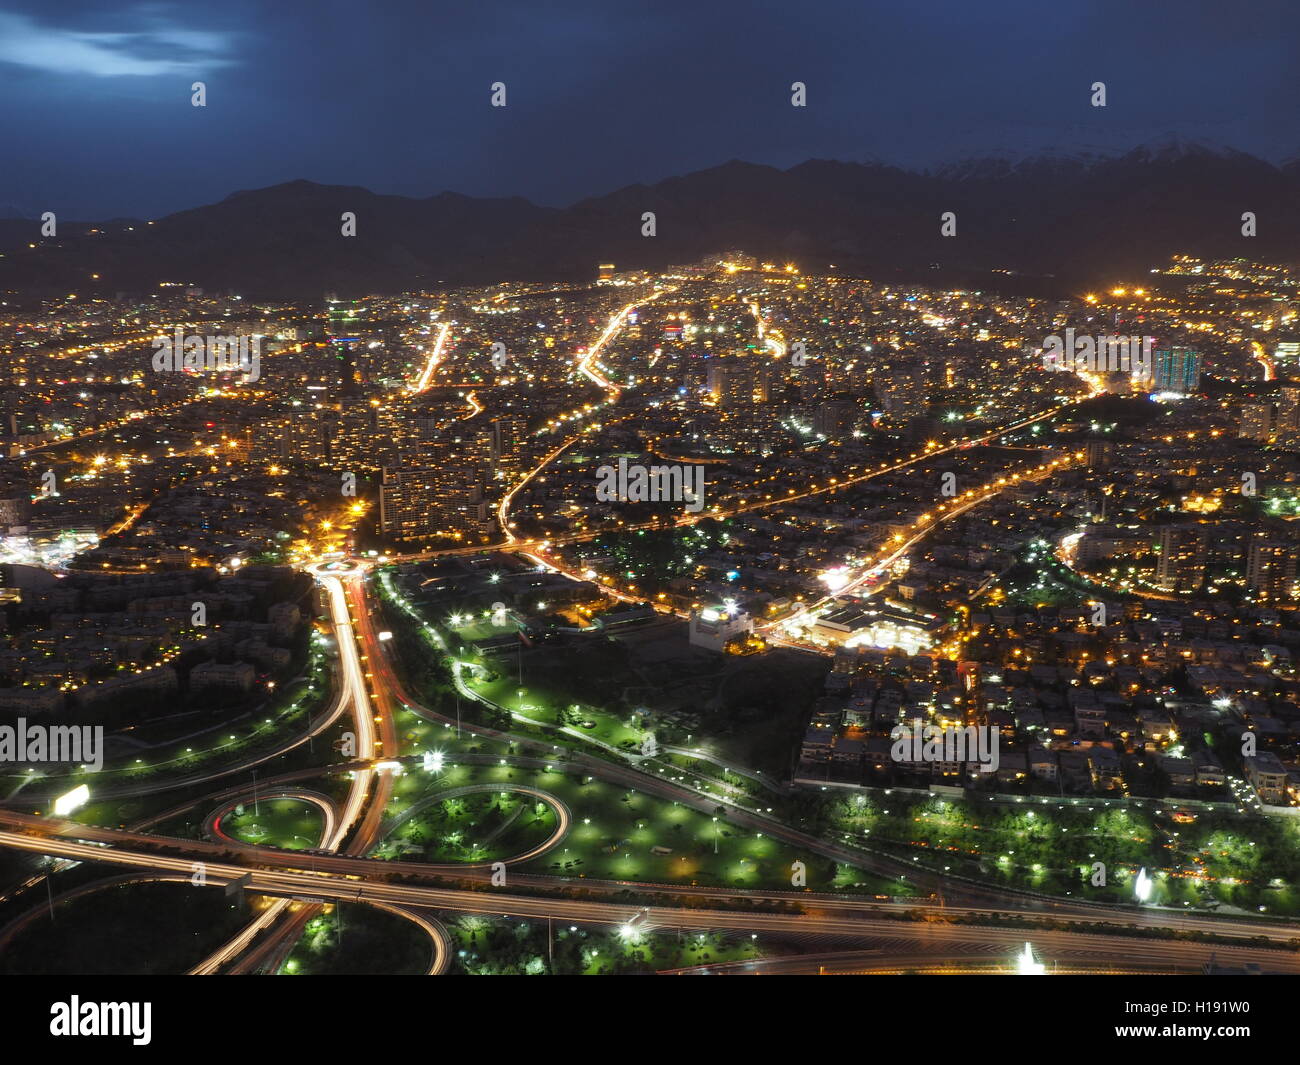 Tehran city at night with Alborz mountain range backdrop Stock Photo